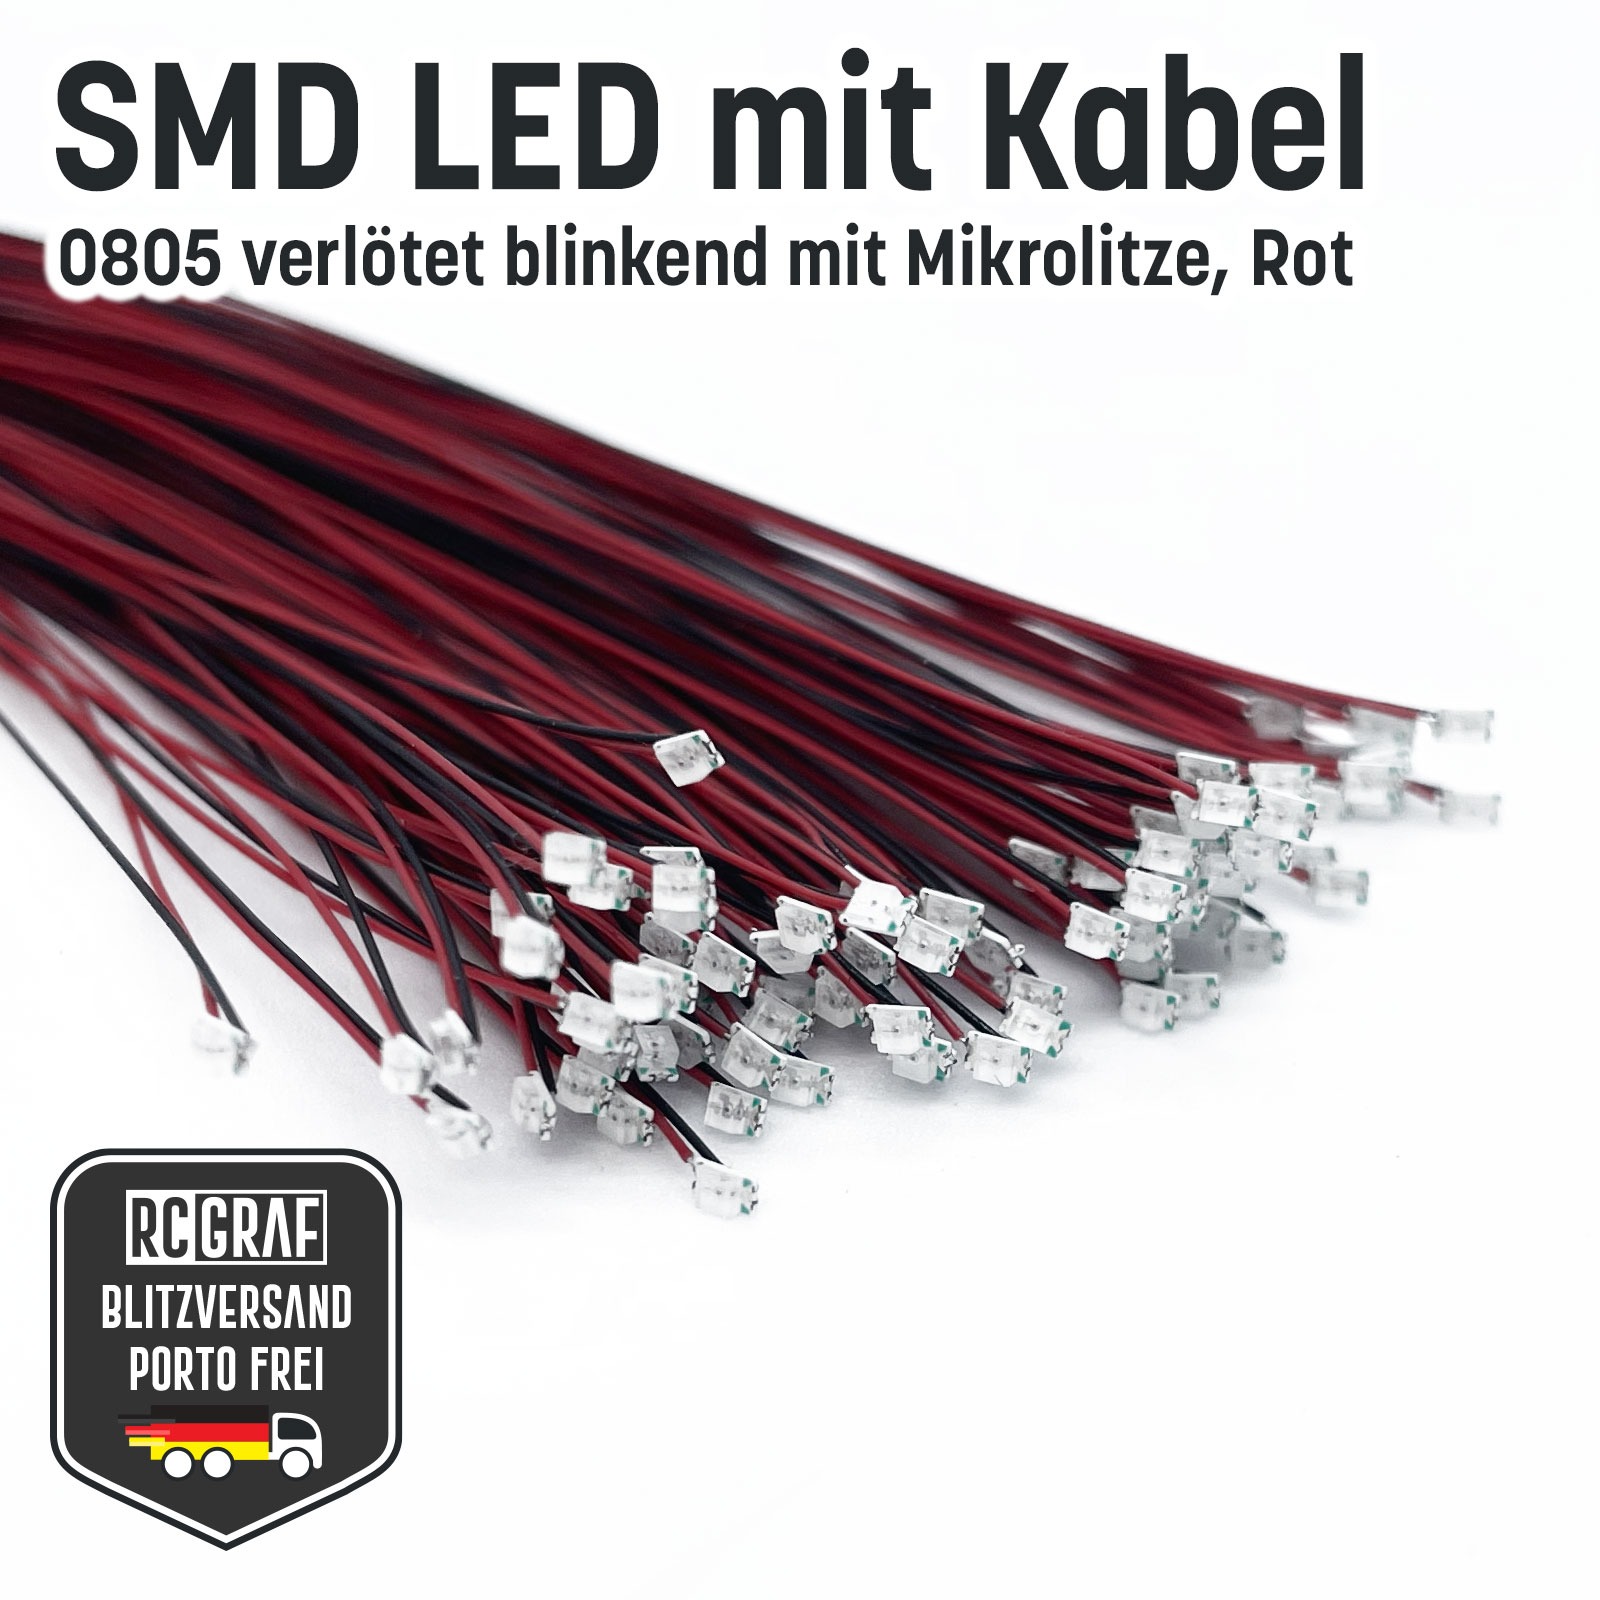 Flashing SMD LED 0805 Microlitz 30cm soldered 4